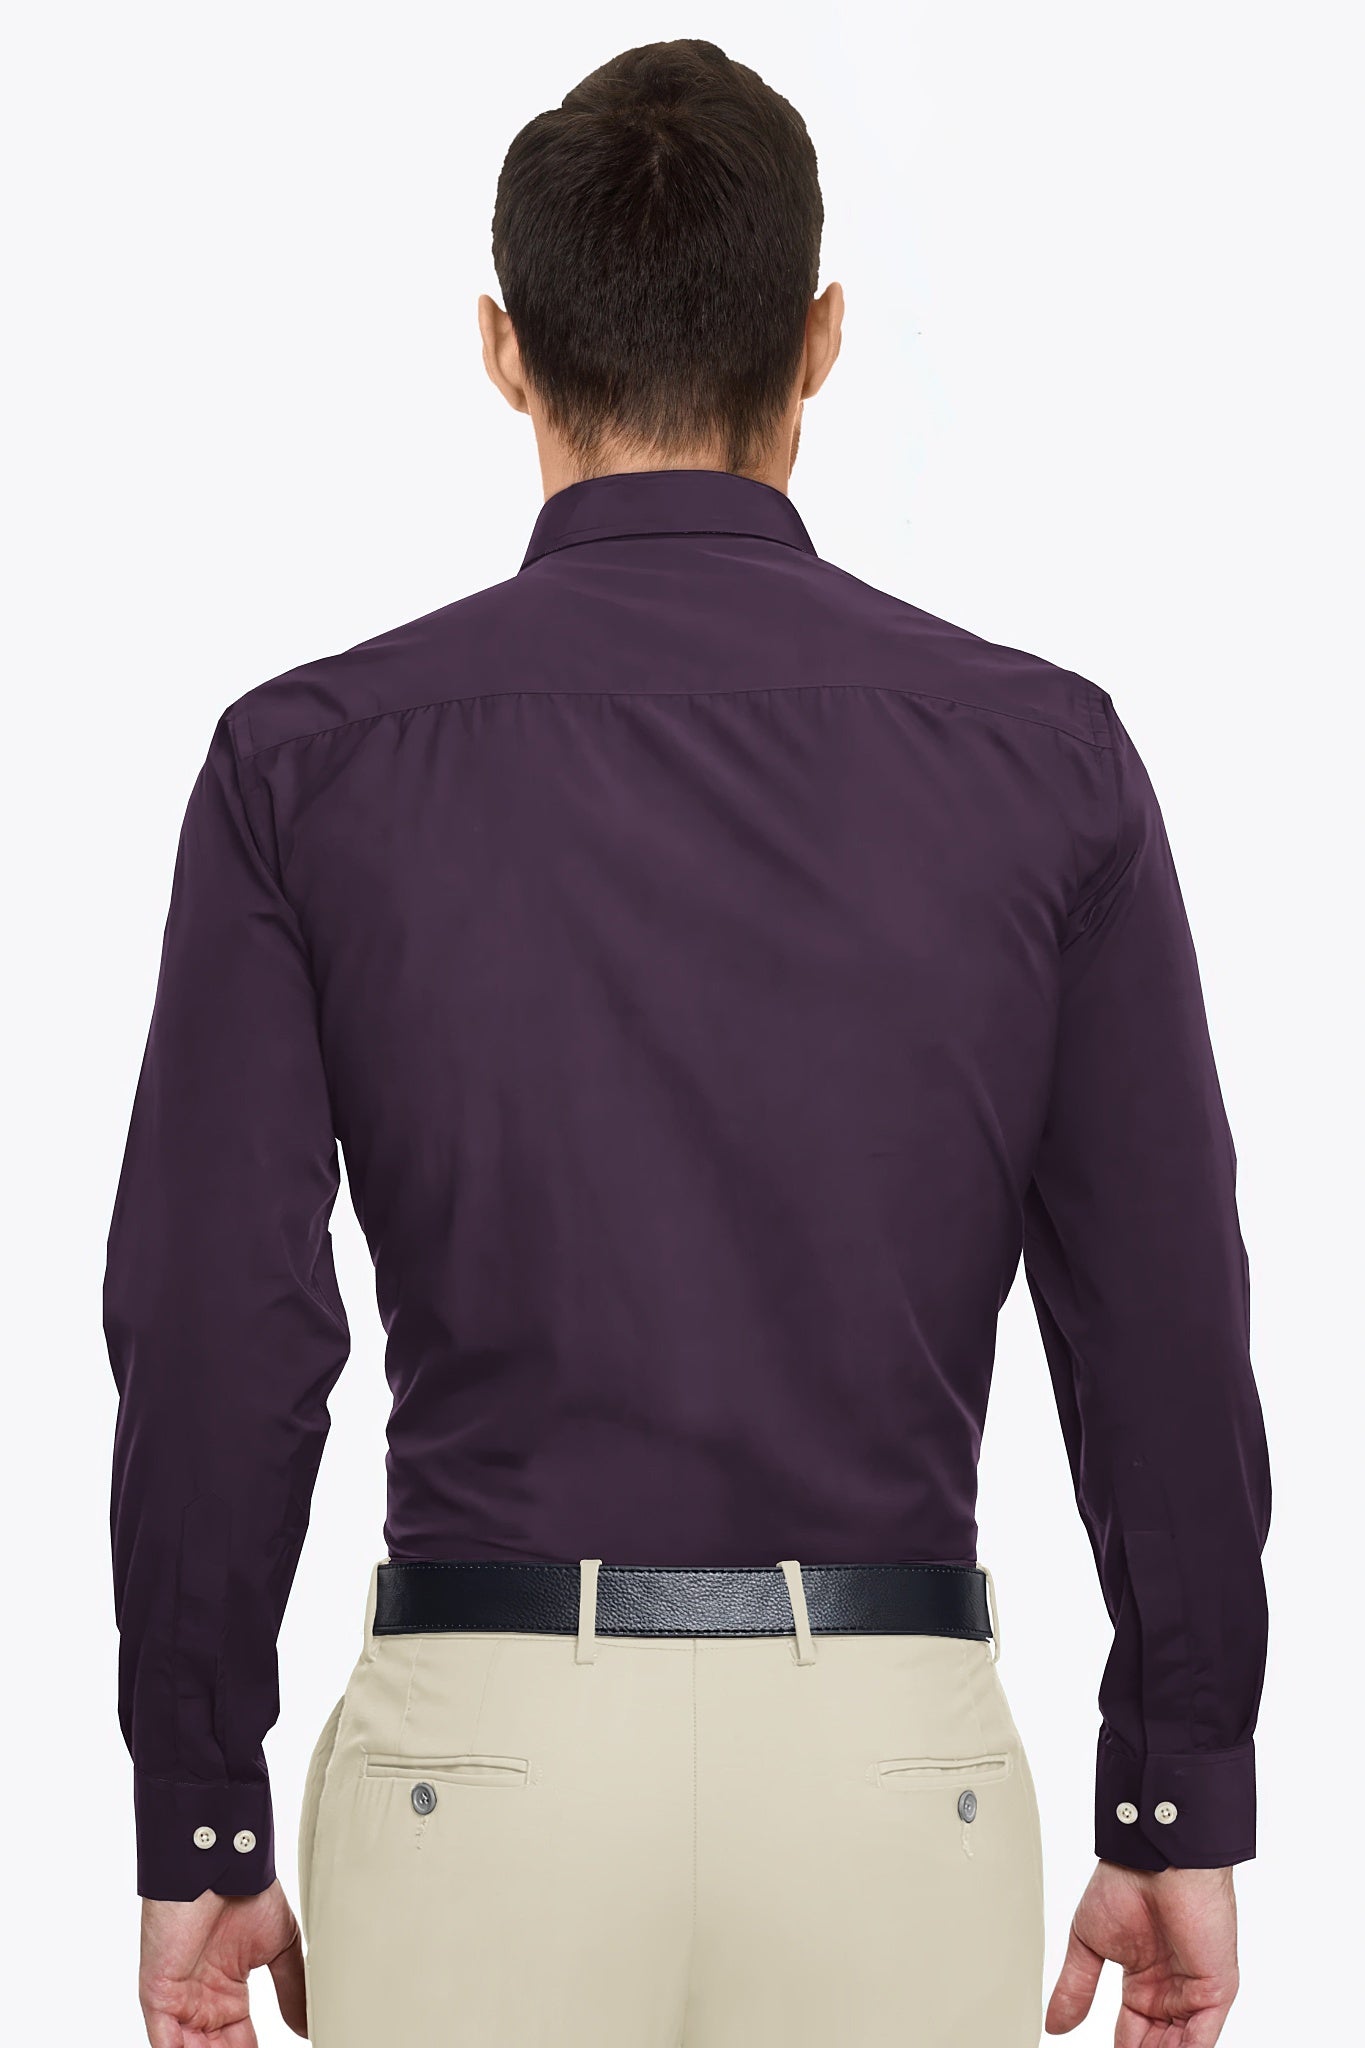 Thunder Purple Men's Solid Giza Cotton Shirt